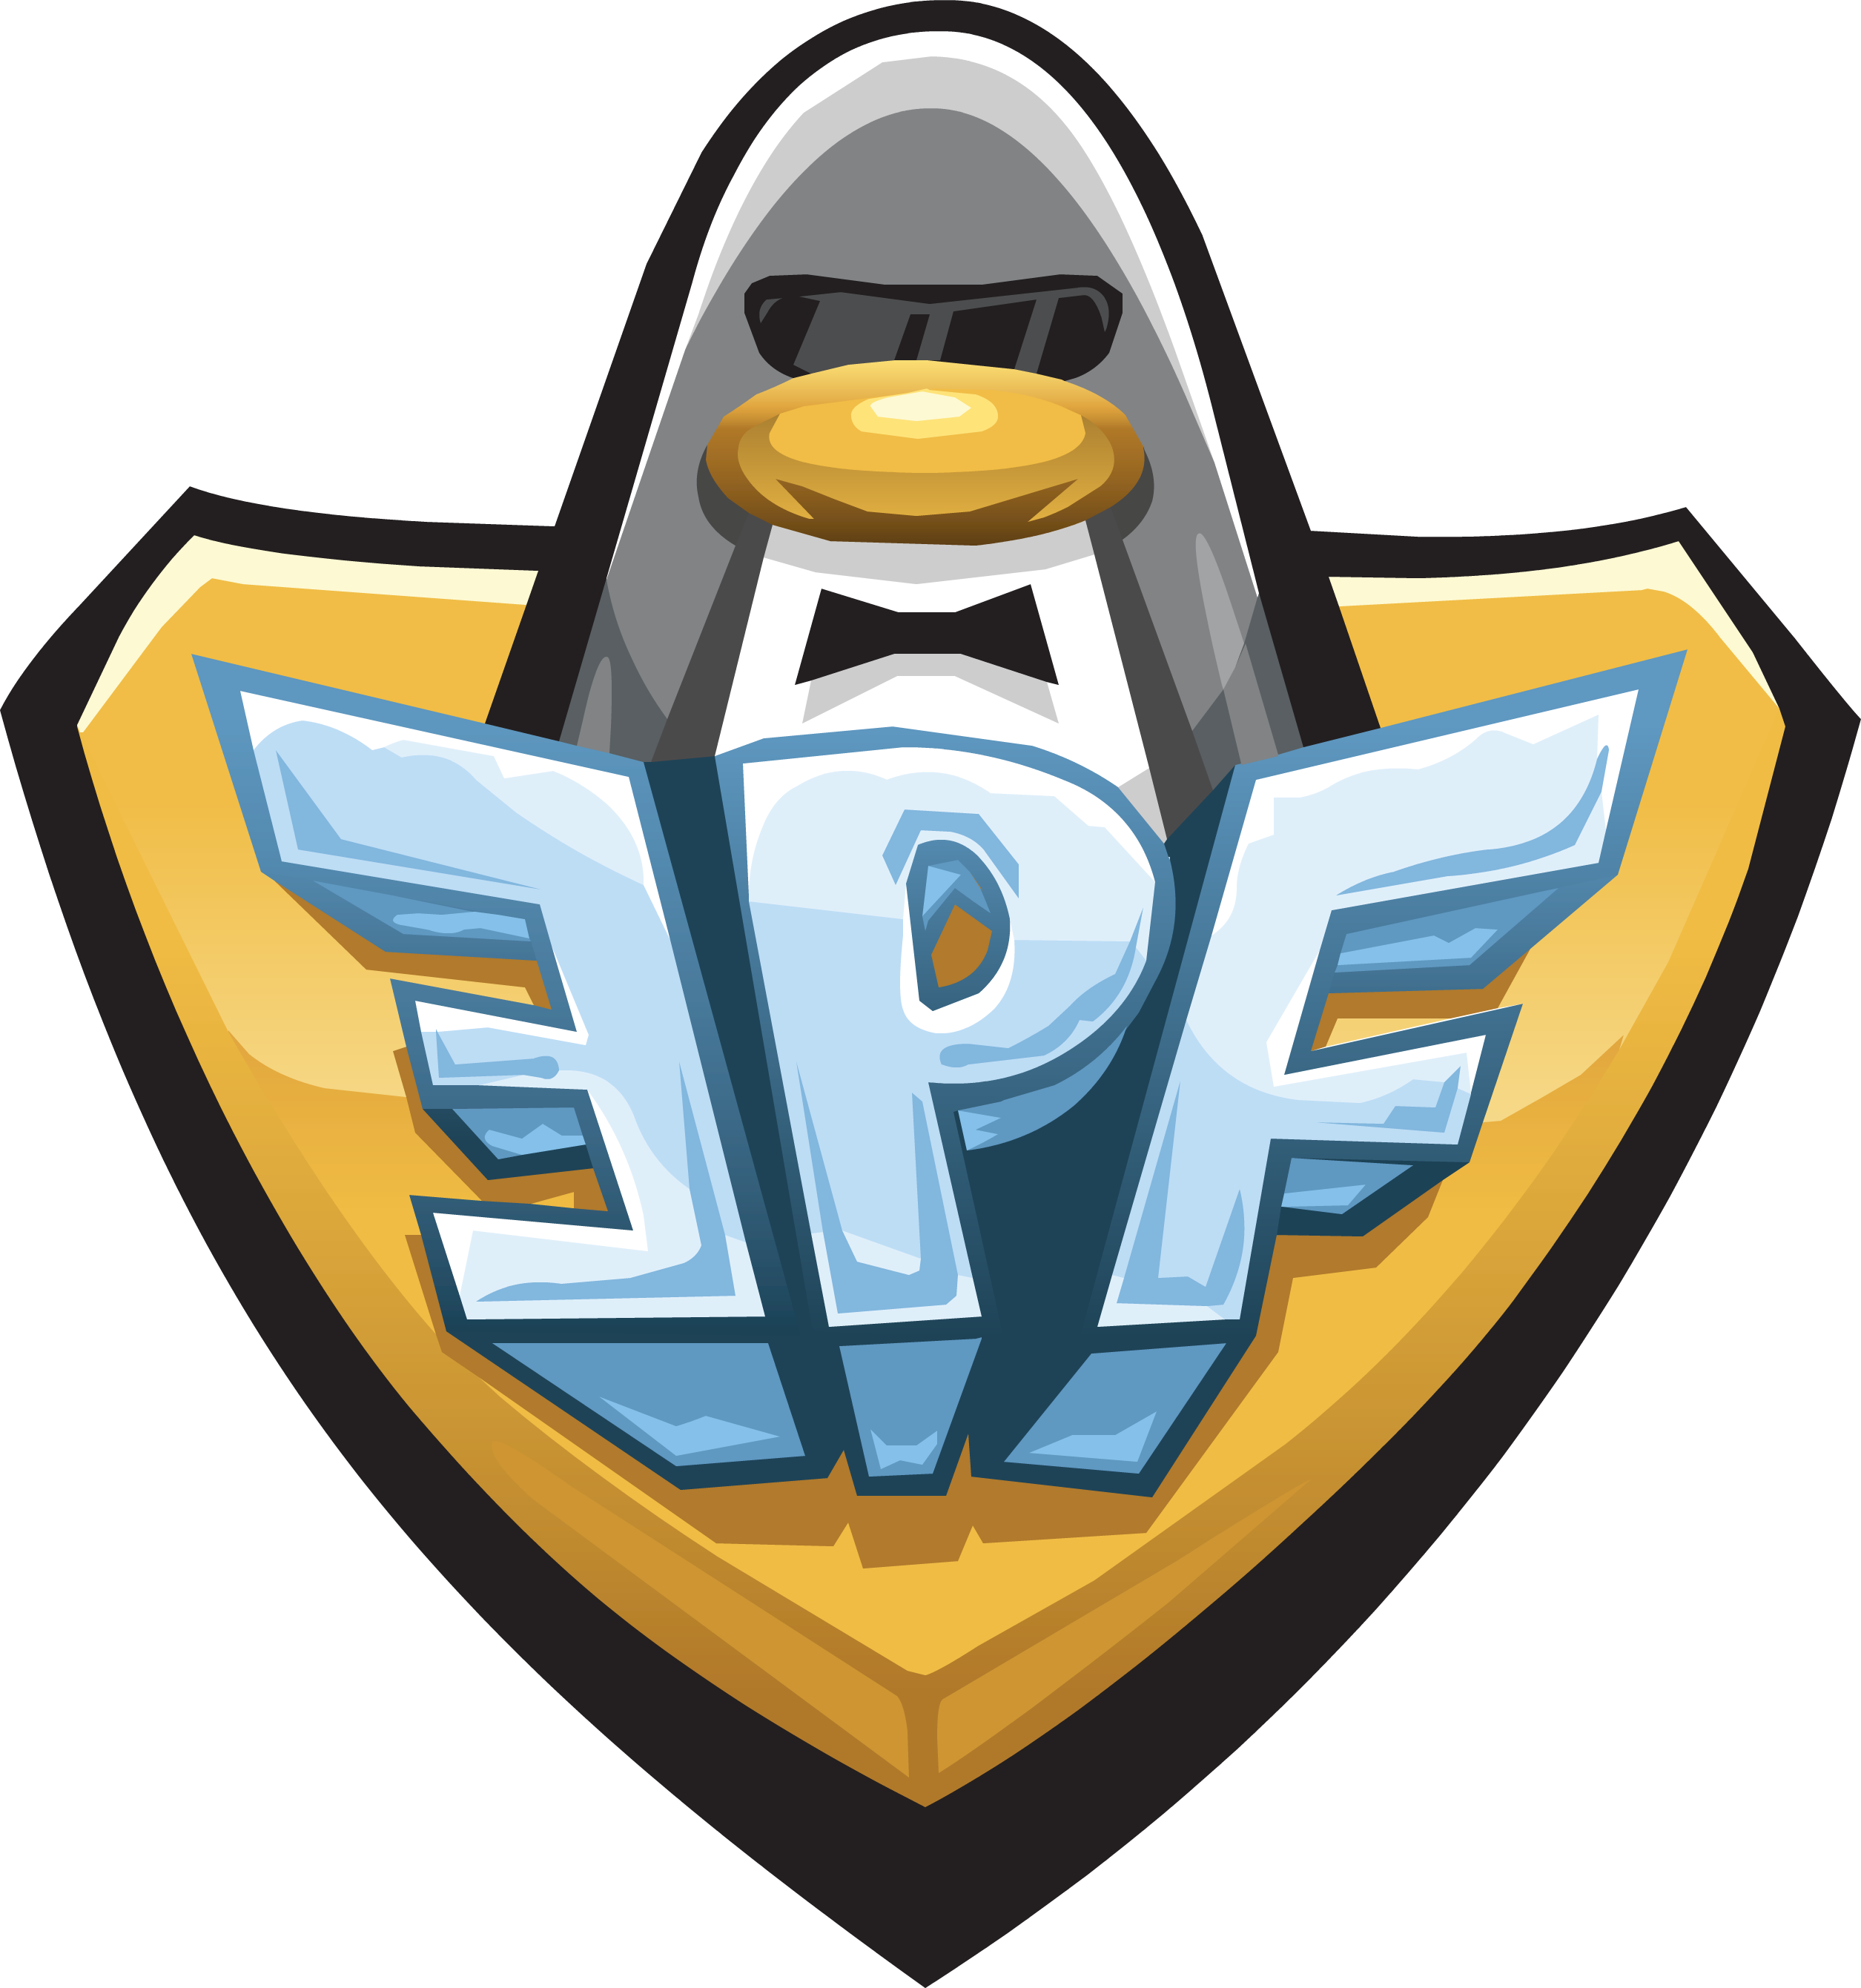 Actualizar 42+ imagen club penguin epf logo